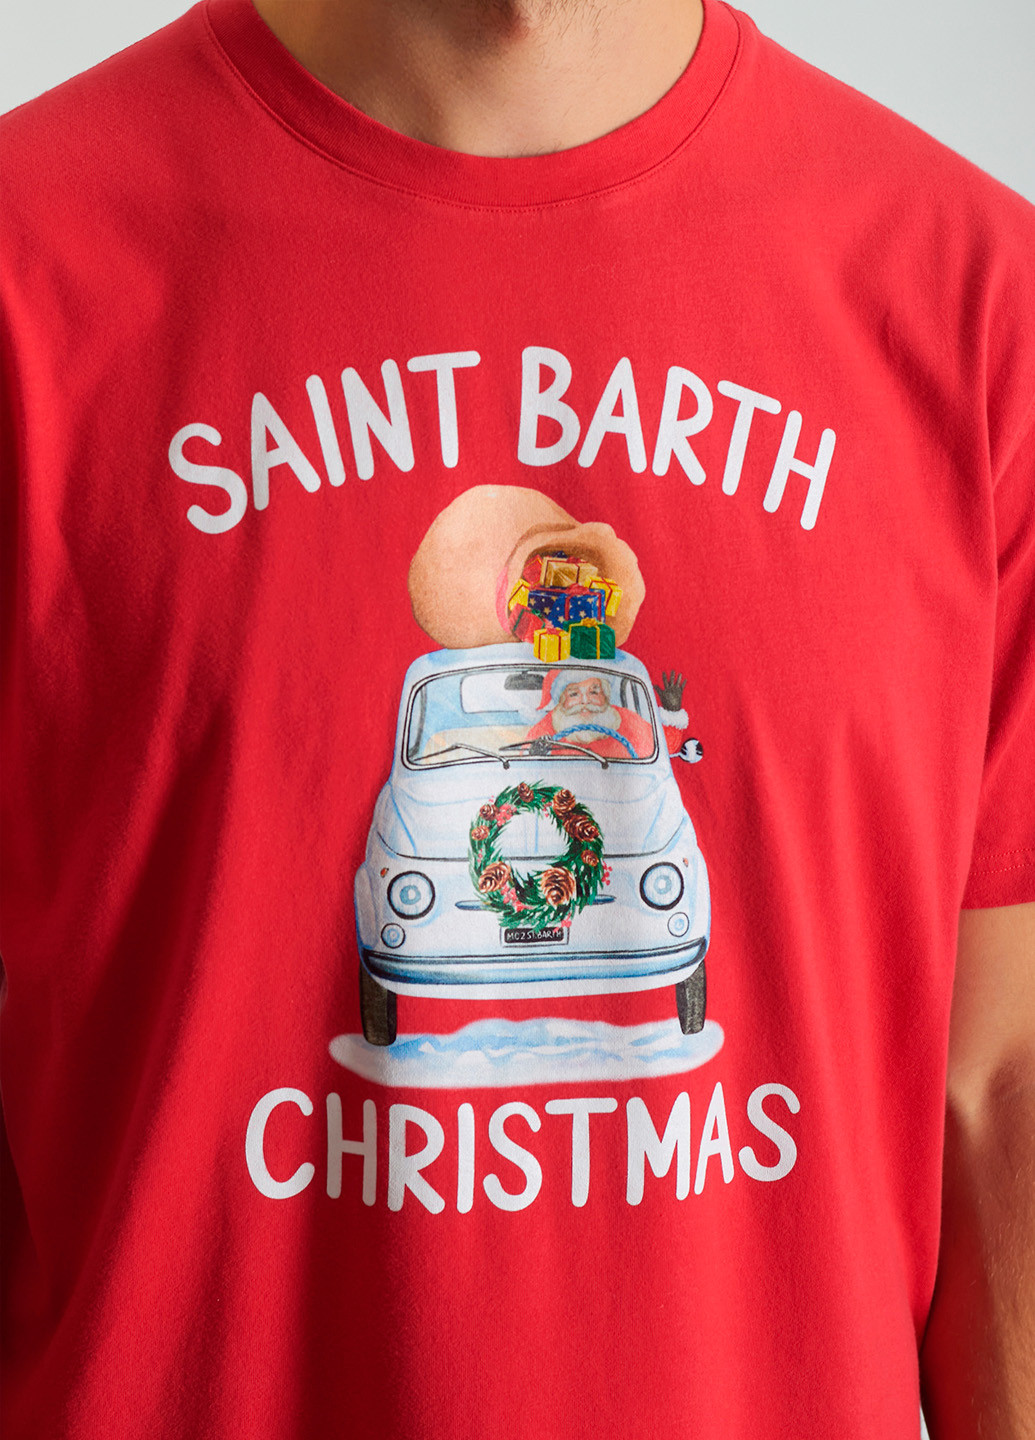 Червона футболка MC2 Saint Barth